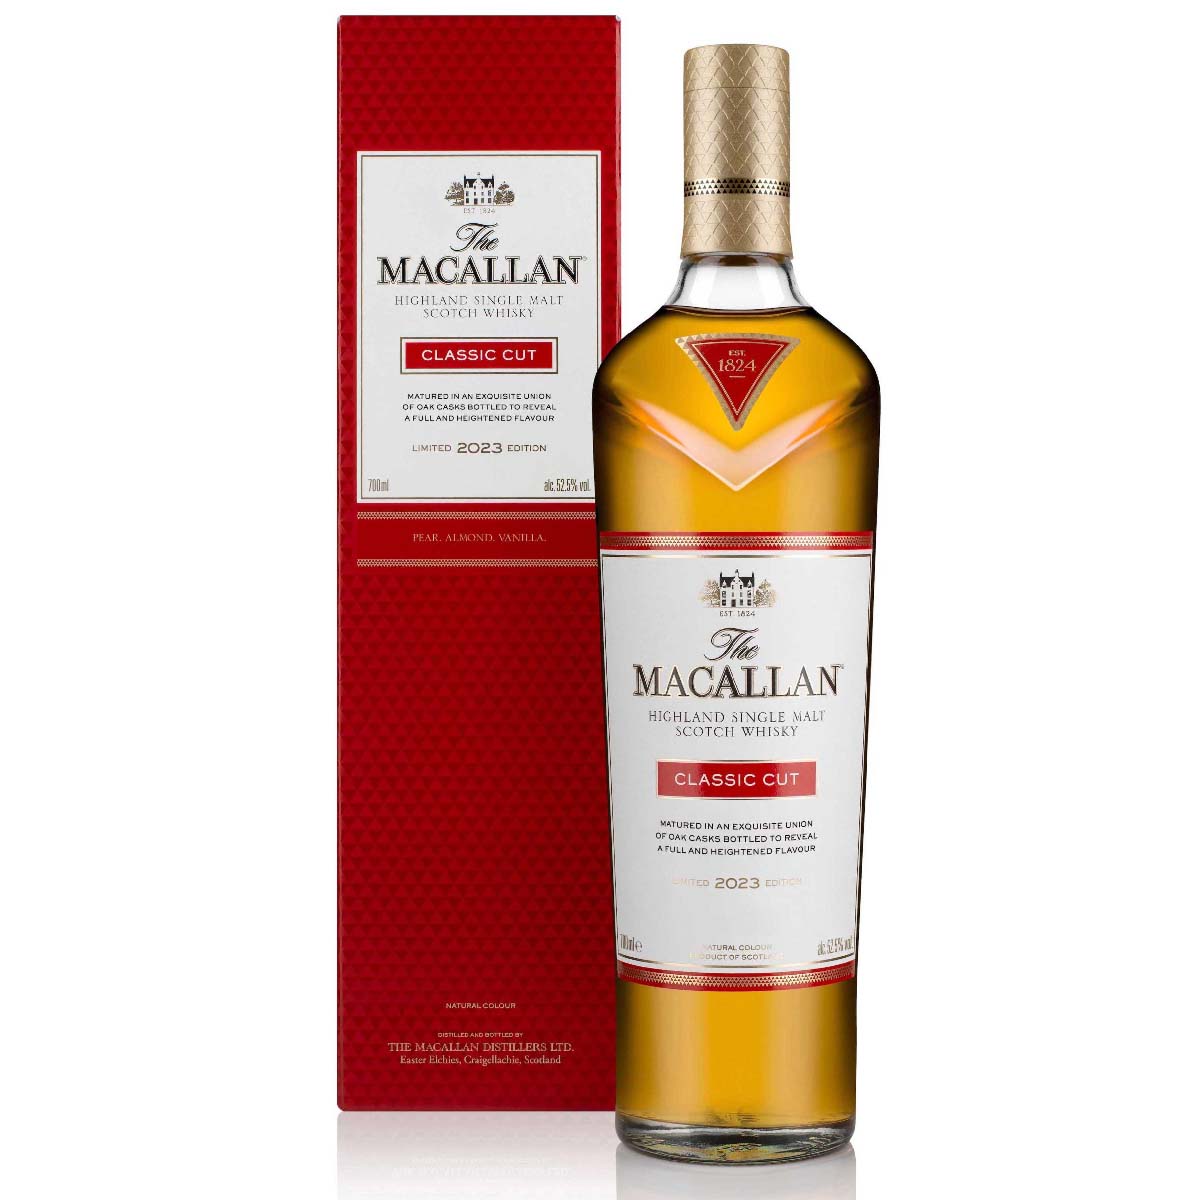 The Macallan Classic Cut 2023 Edition Single Malt Scotch